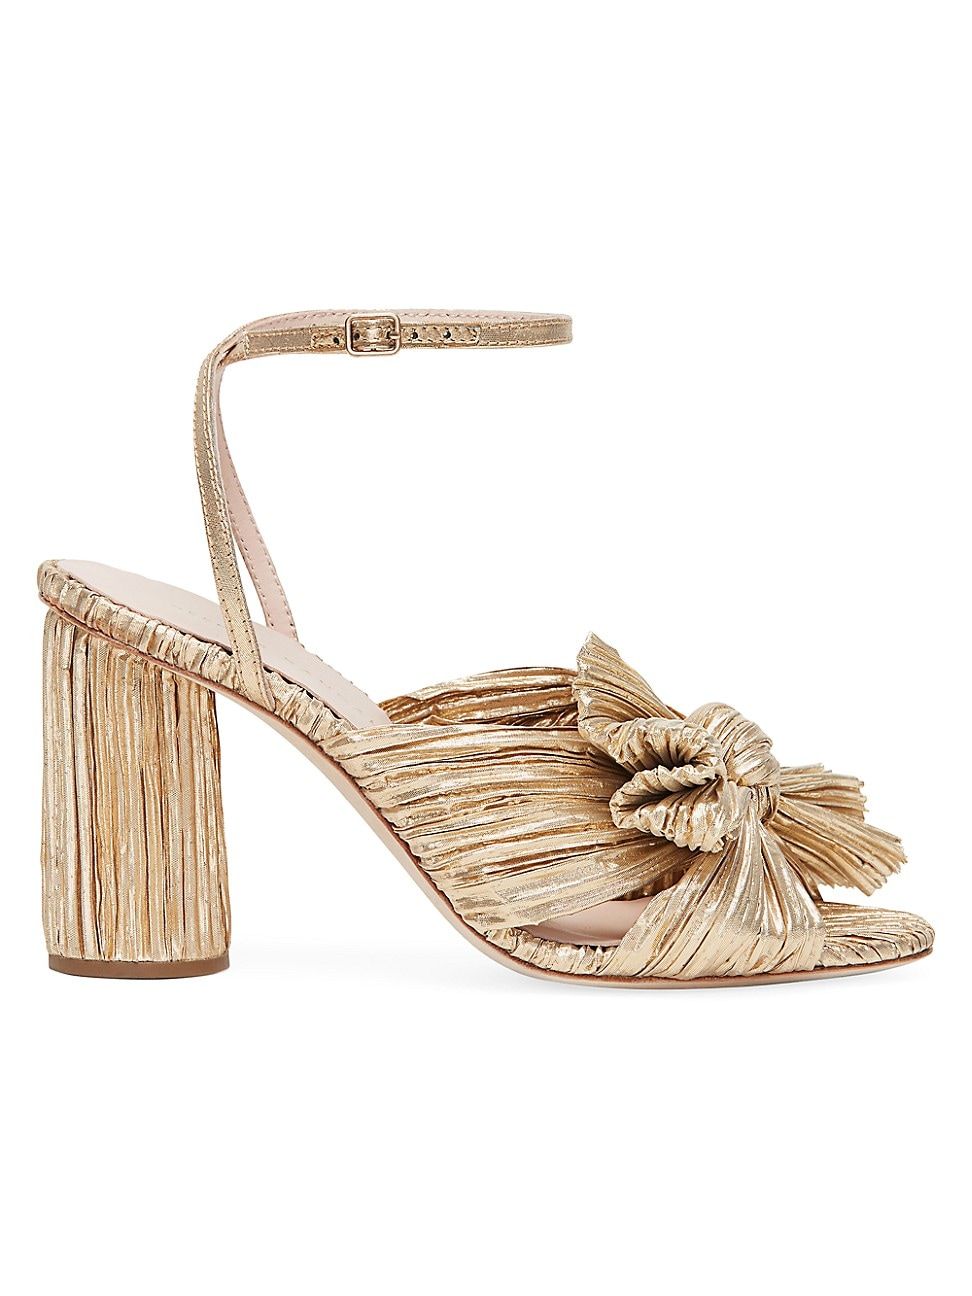 Loeffler Randall Women's Camellia Knotted Lamé Sandals - Gold - Size 7 | Saks Fifth Avenue